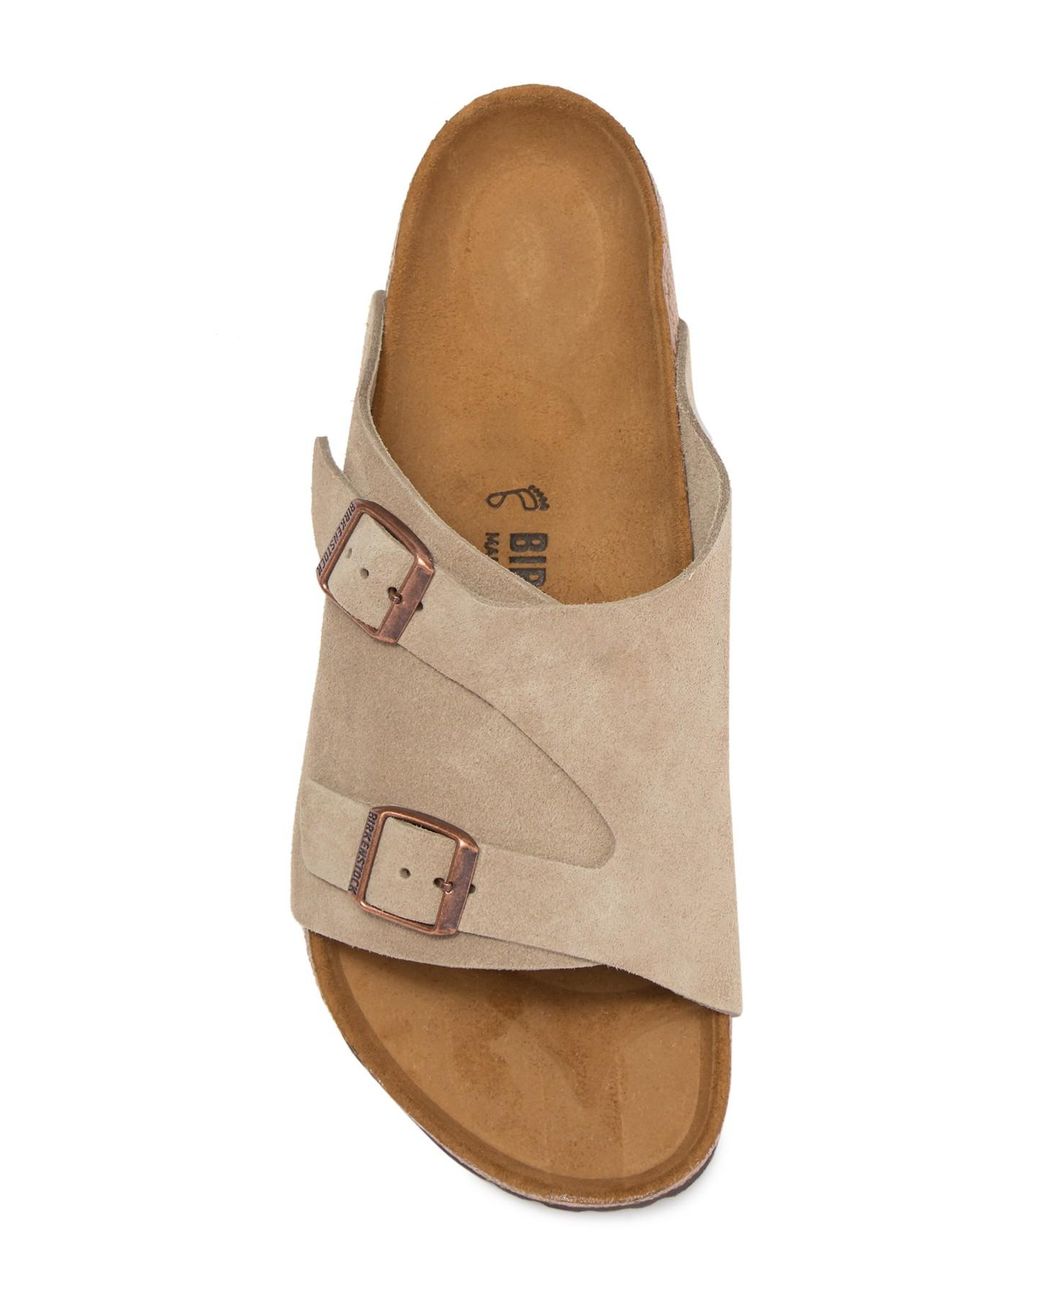 Birkenstock Zurich Sandal - Discontinued in Natural for Men | Lyst